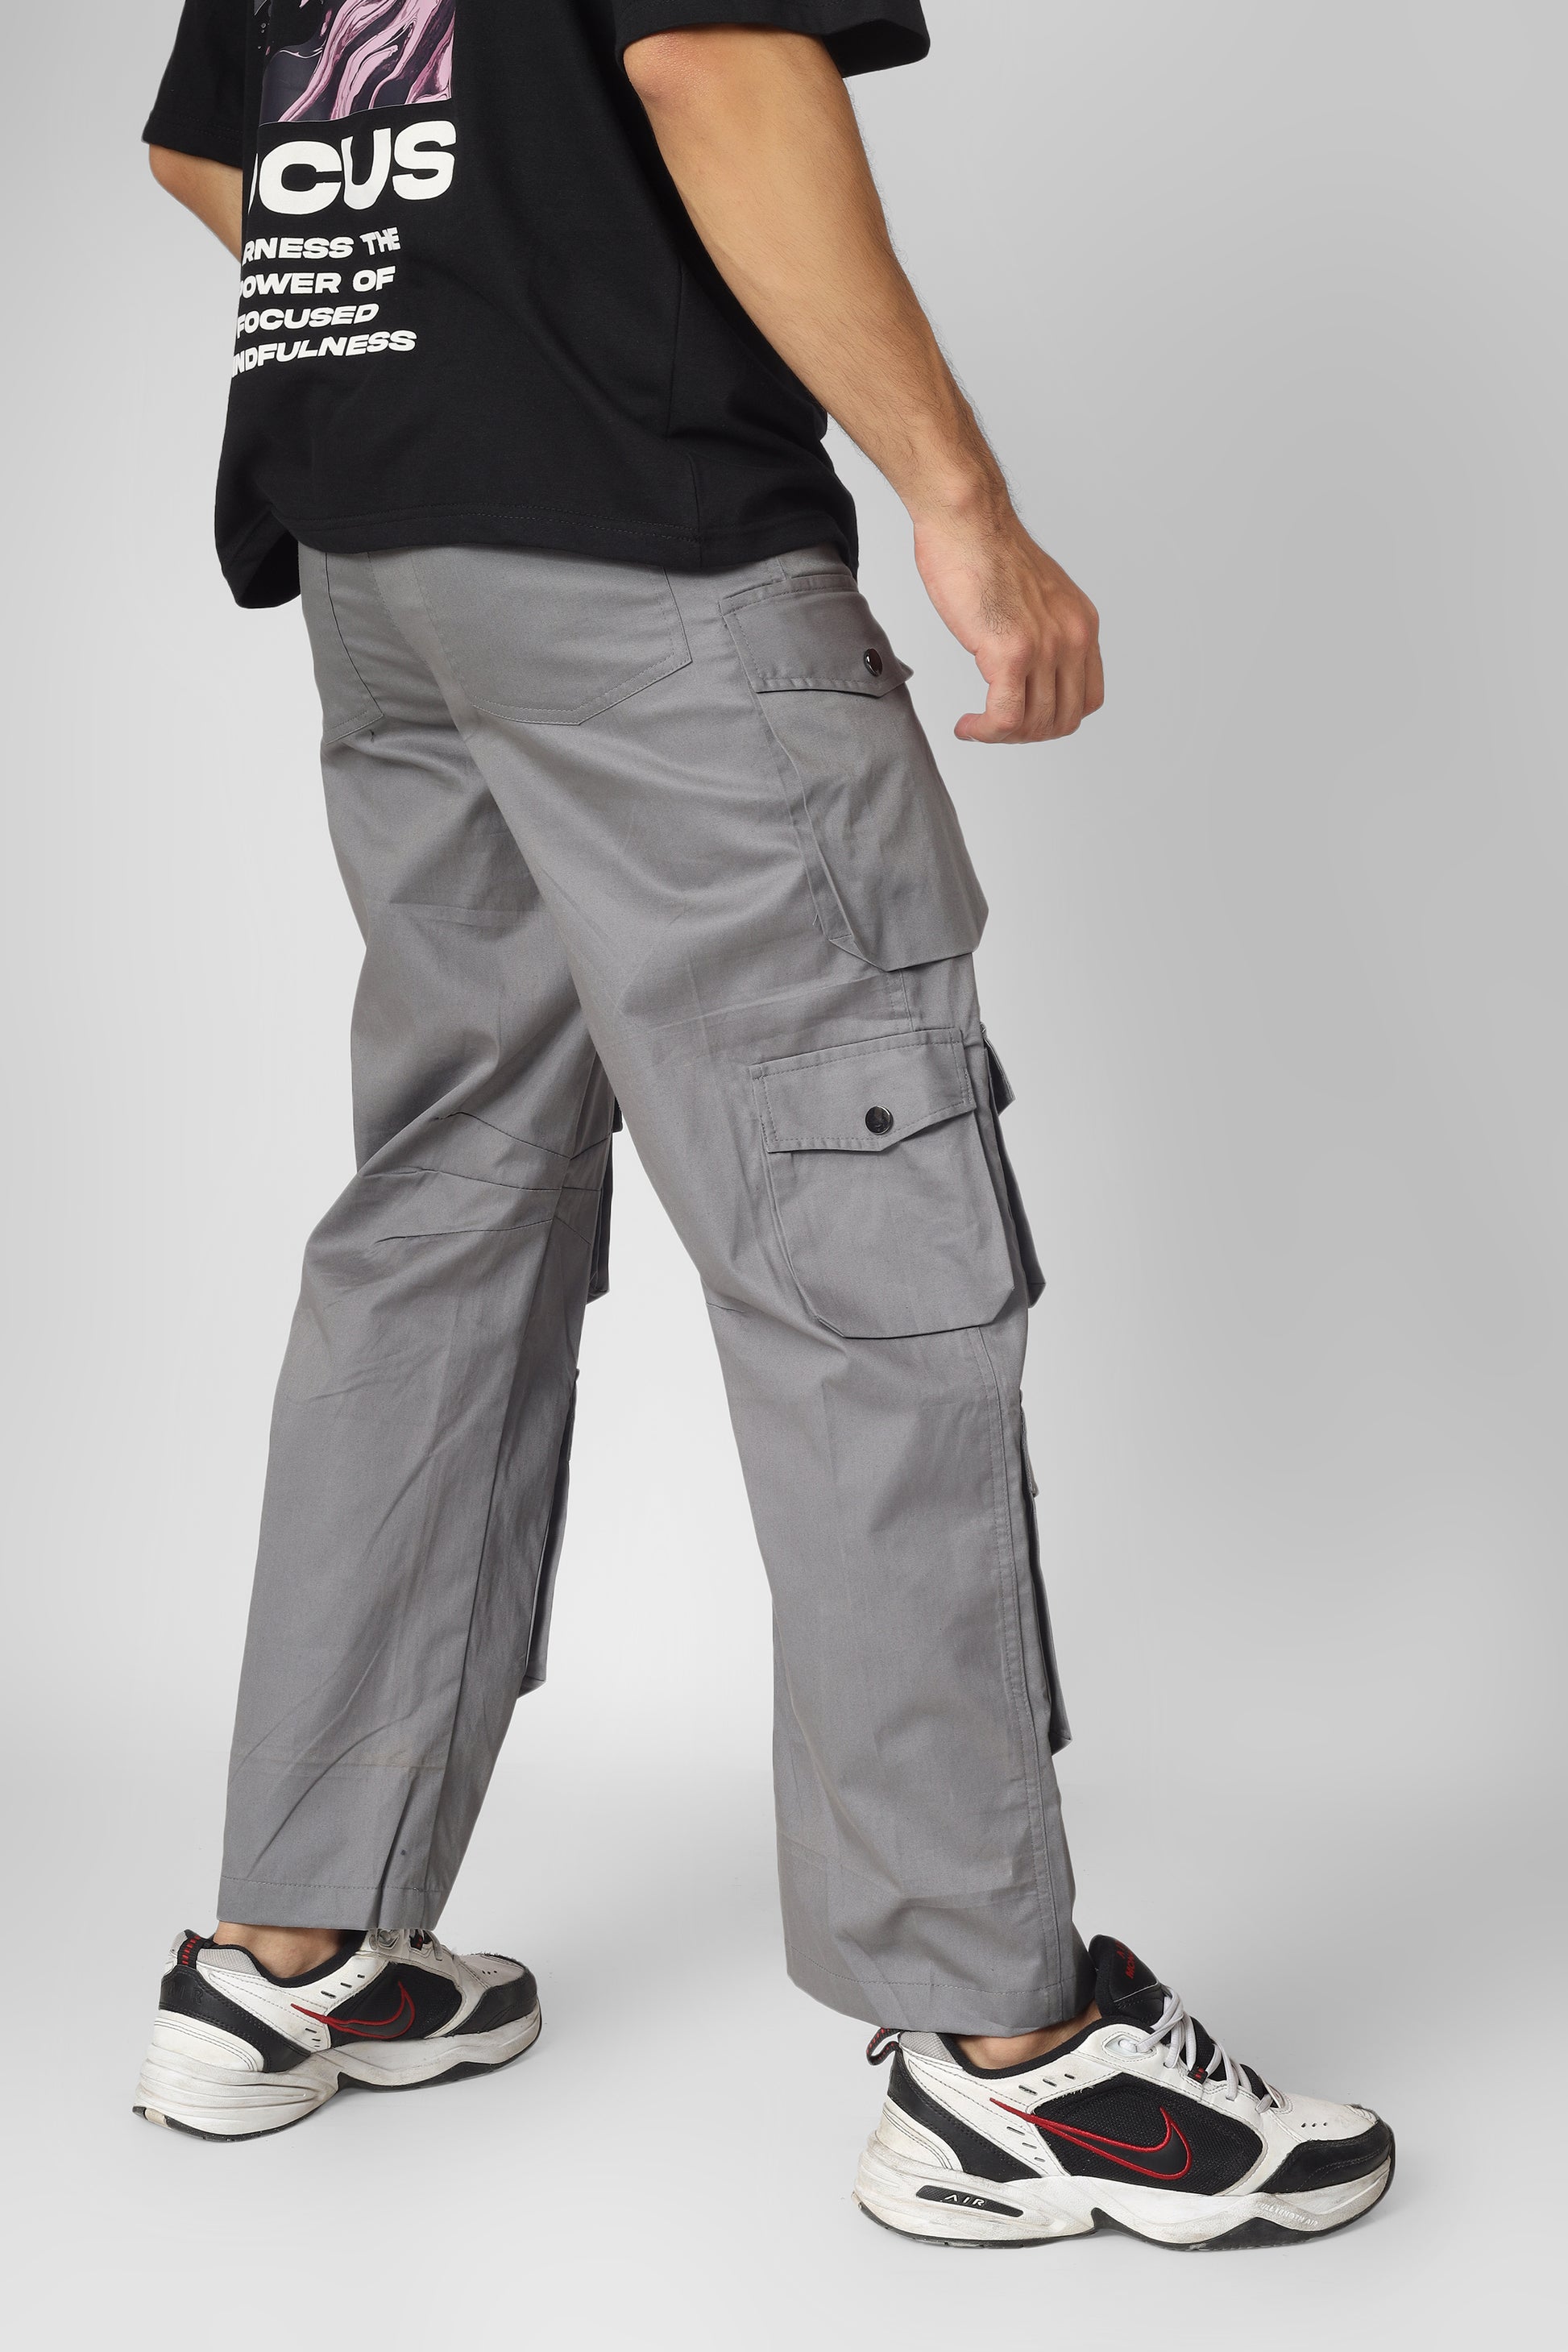 Moon Stone Cargo pants With 12 Cargo Pocket - Wearduds